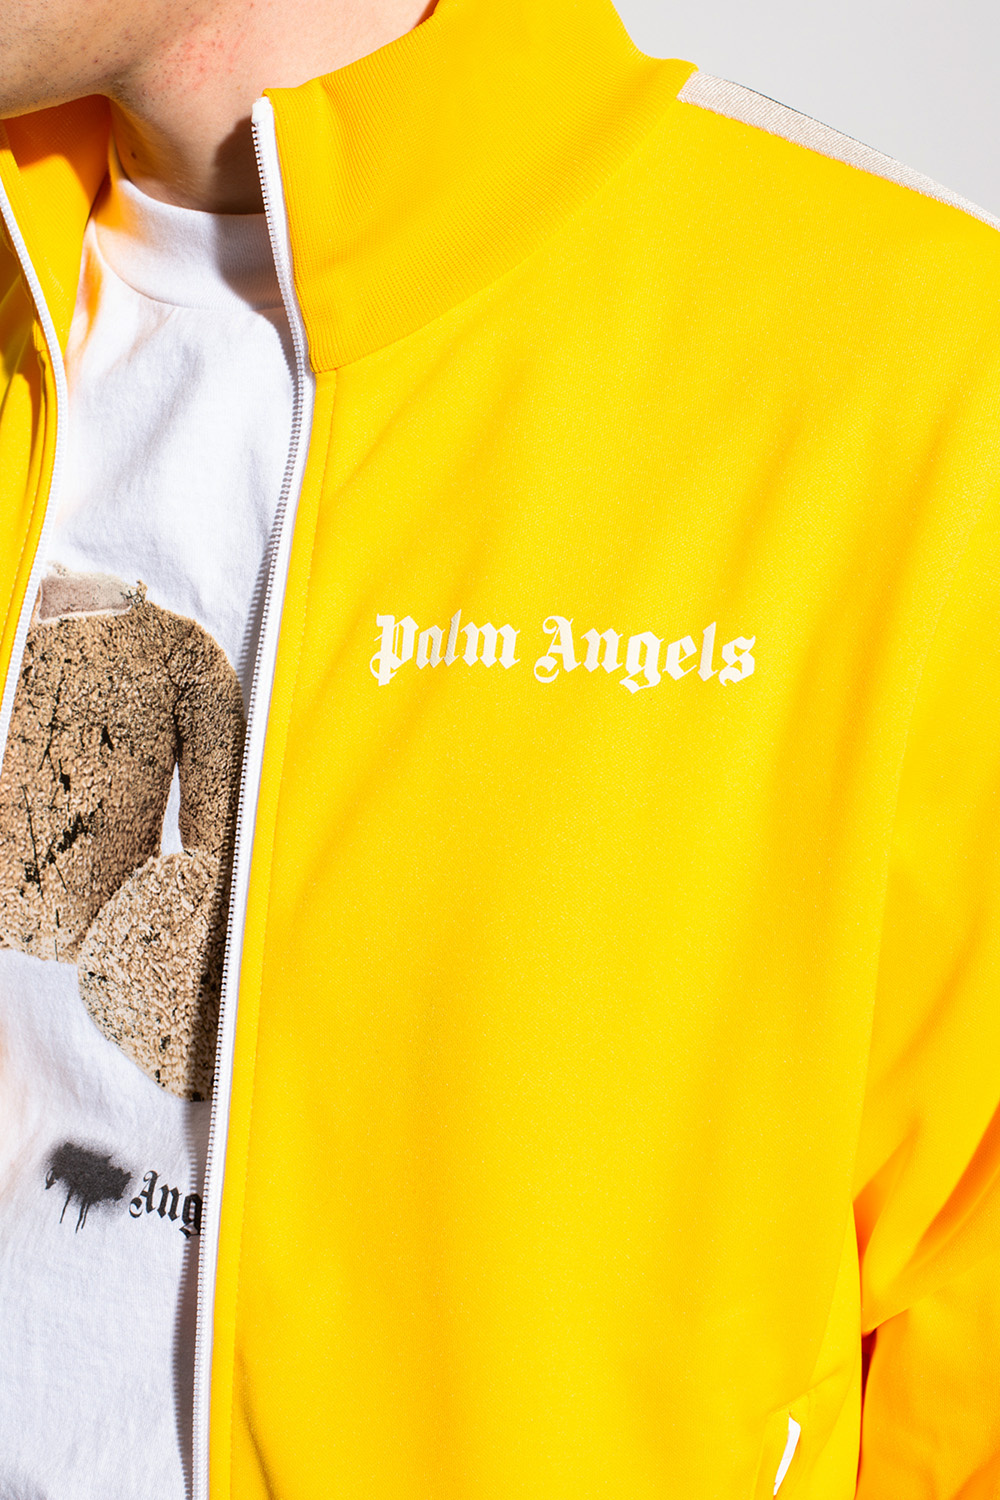 Palm Angels Track jacket